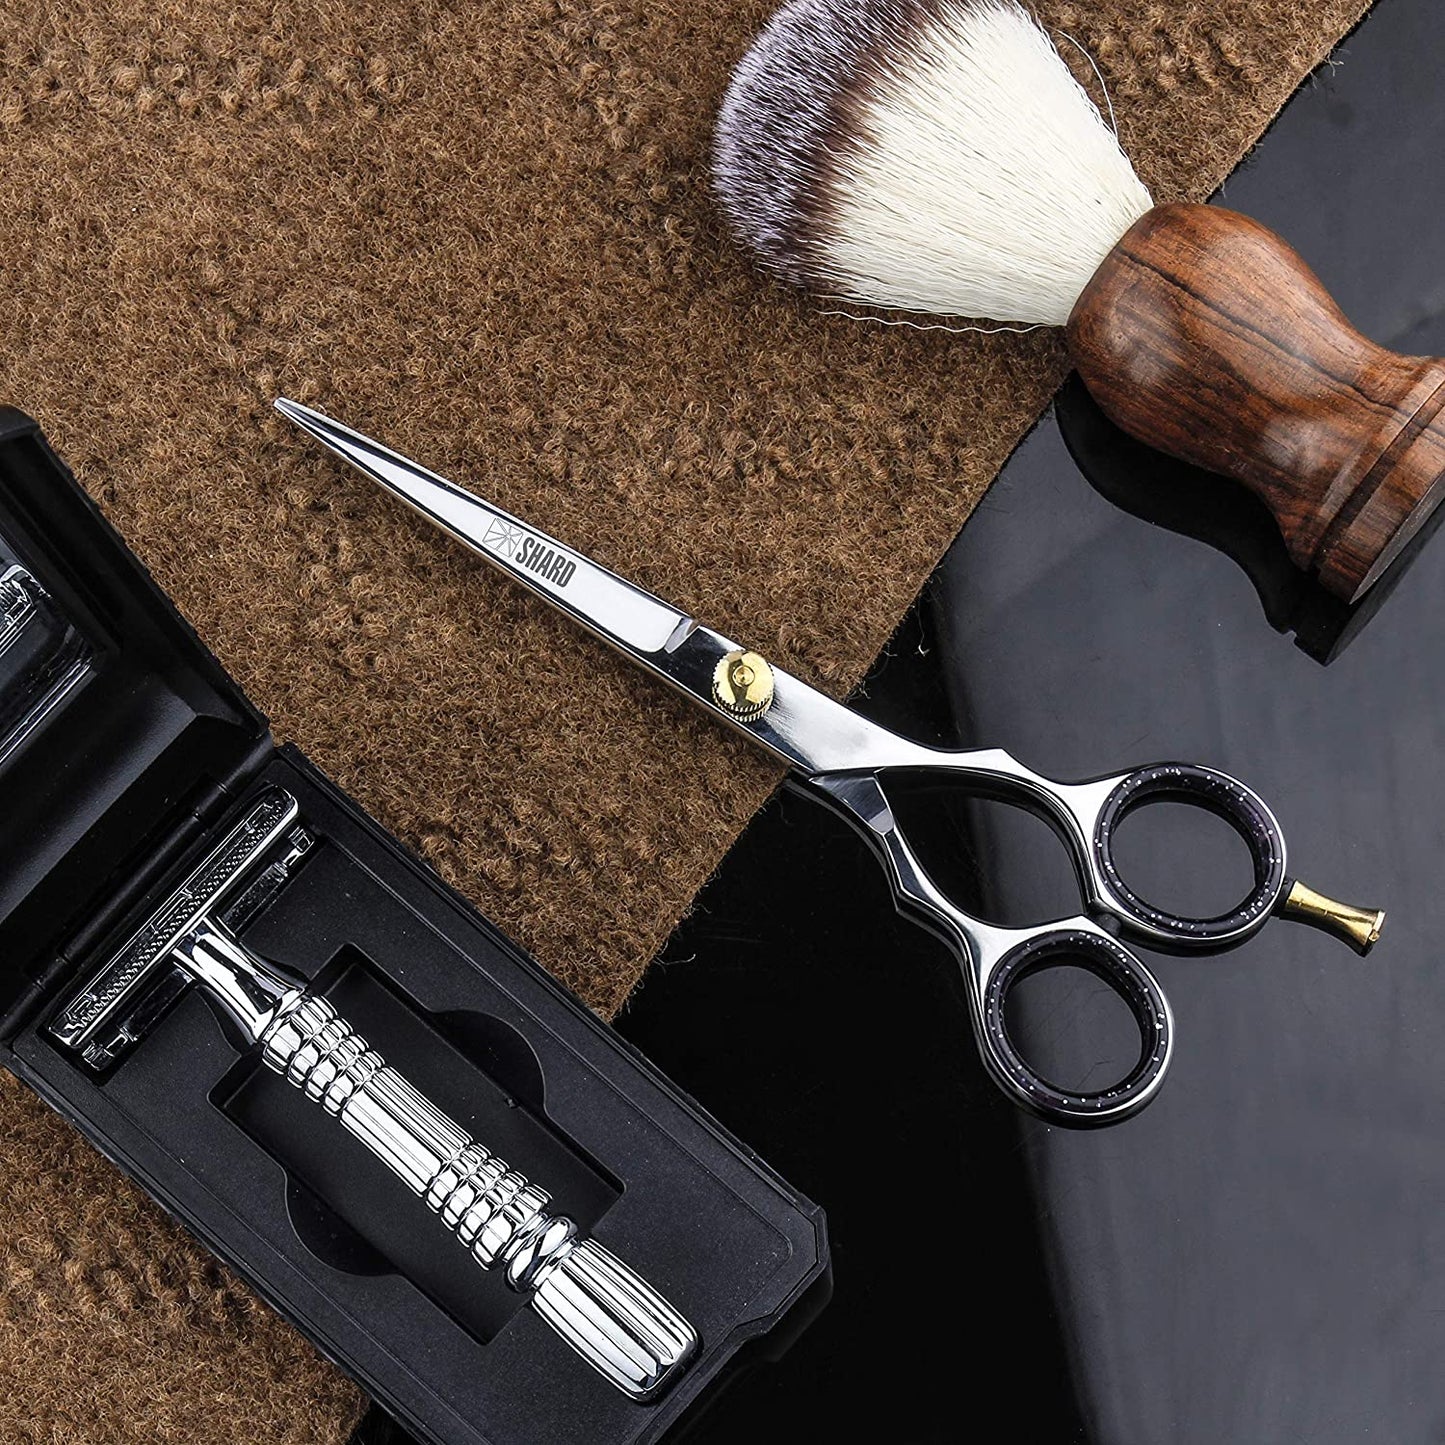 SHARD Hair Scissors- Professional Barber Hair Cutting Hairdressing Scissors| Shears for Mustache Beard Grooming Trimming